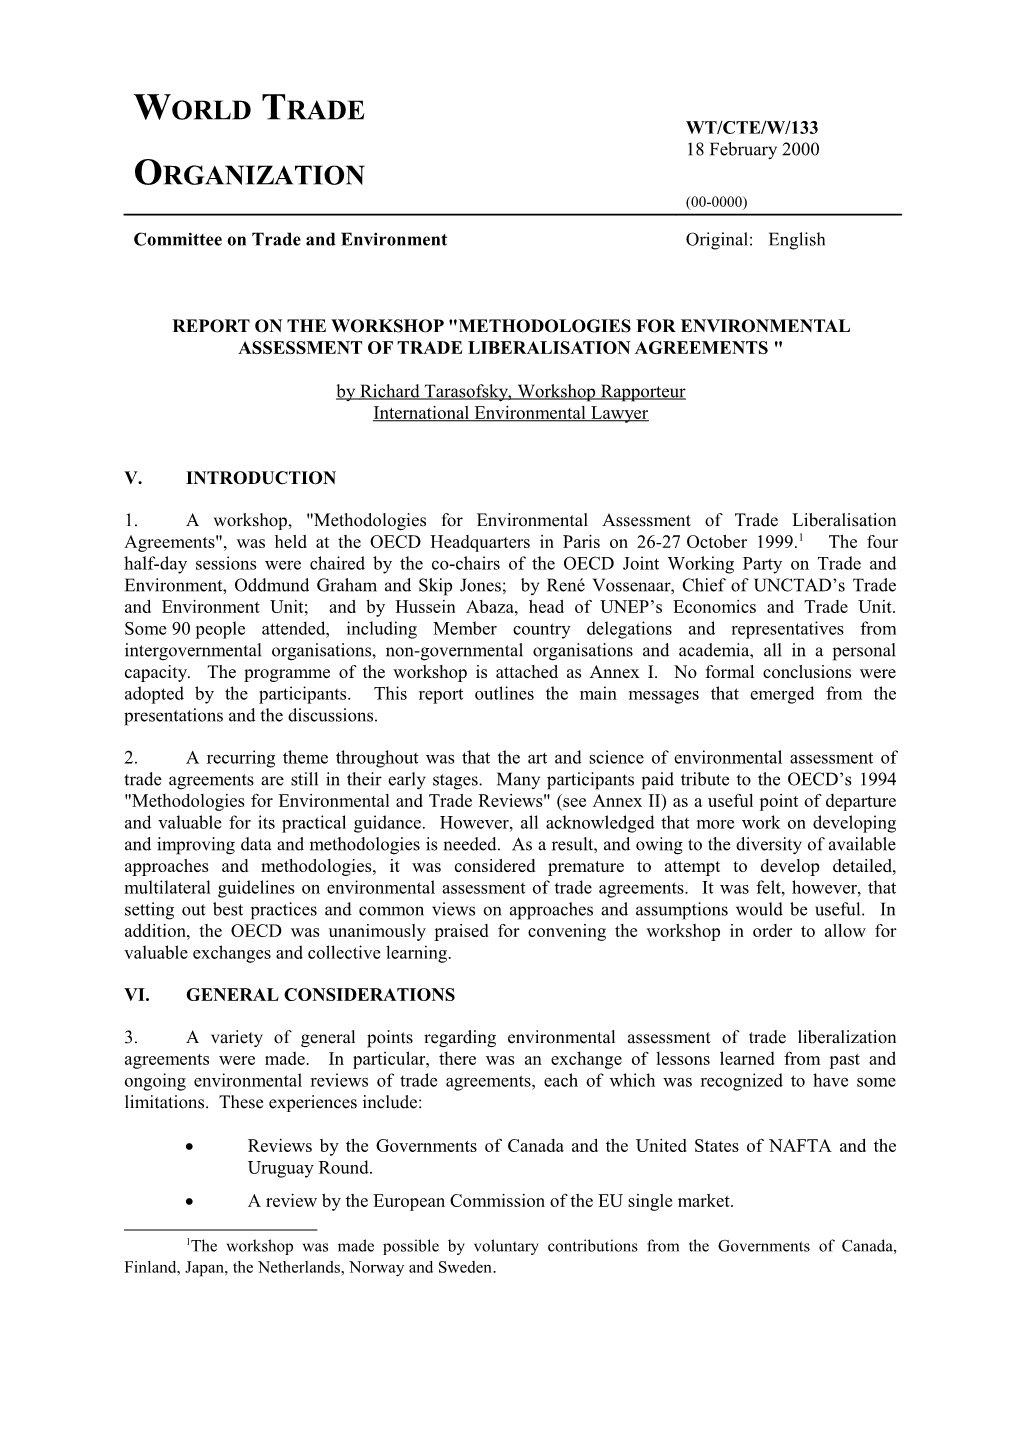 REPORT on the WORKSHOP Methodologies for Environmental Assessment of Trade Liberalisation